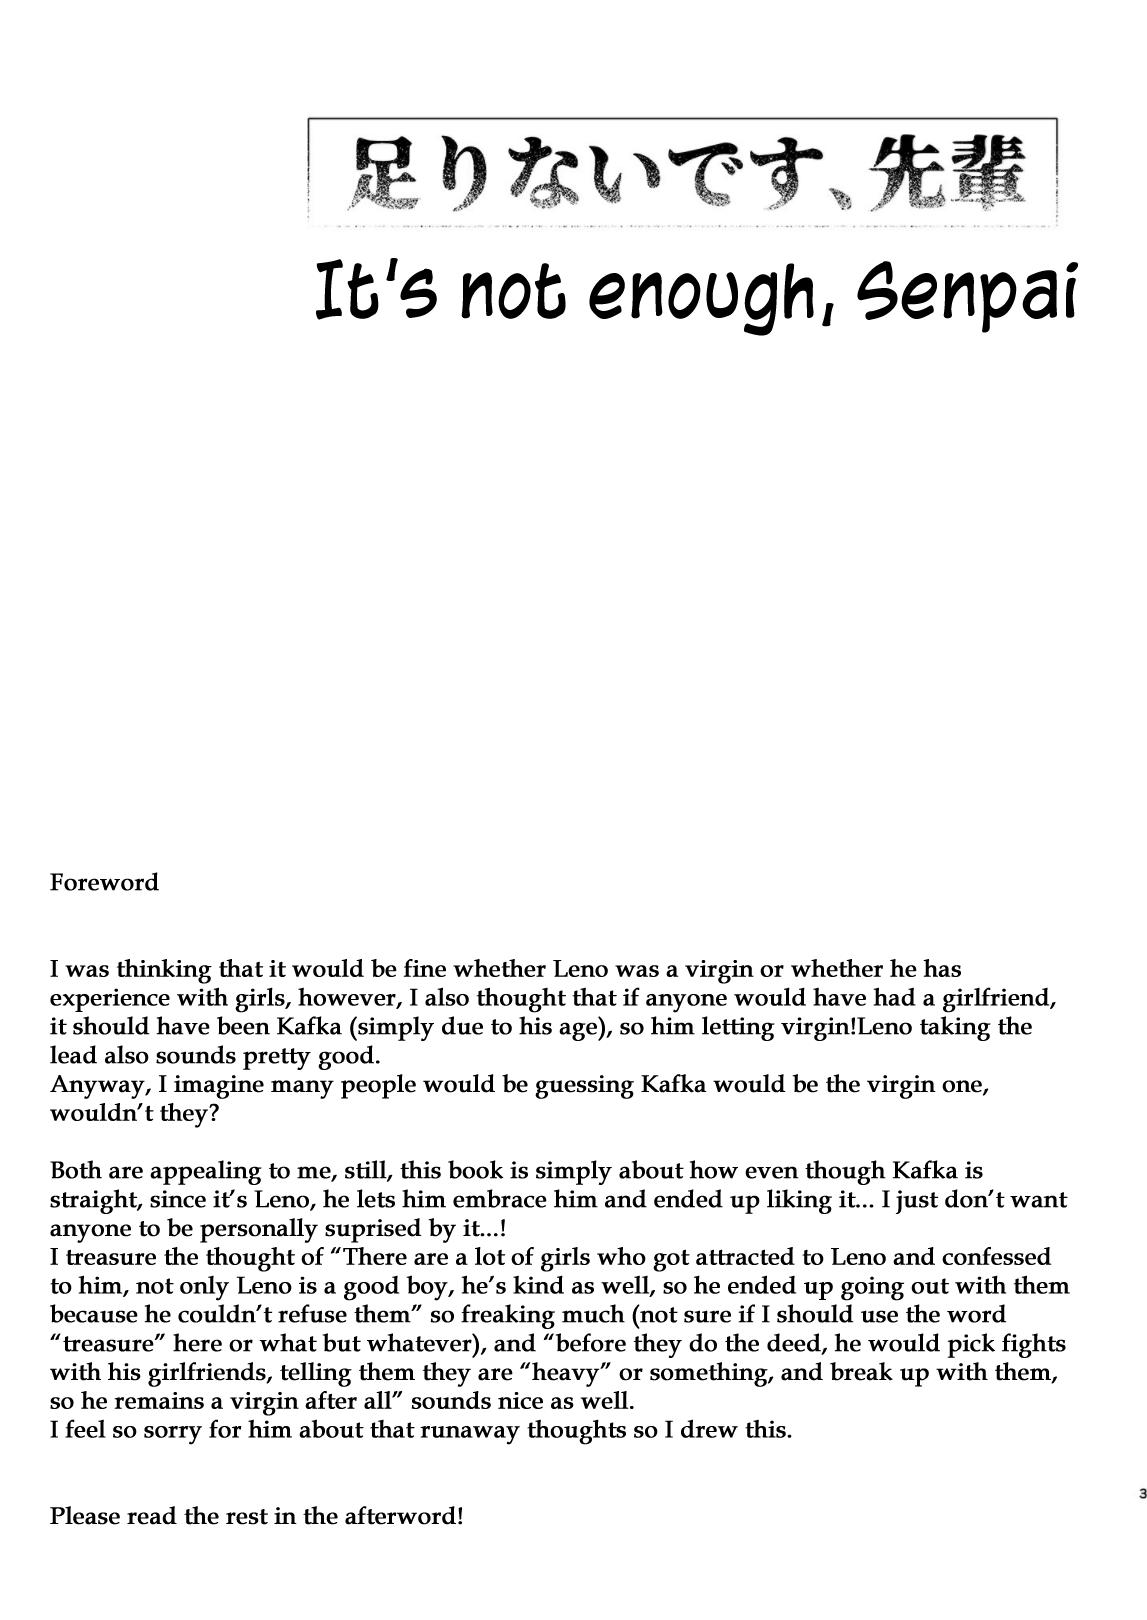 Transexual It's not enough, Senpai - Original Lips - Picture 3